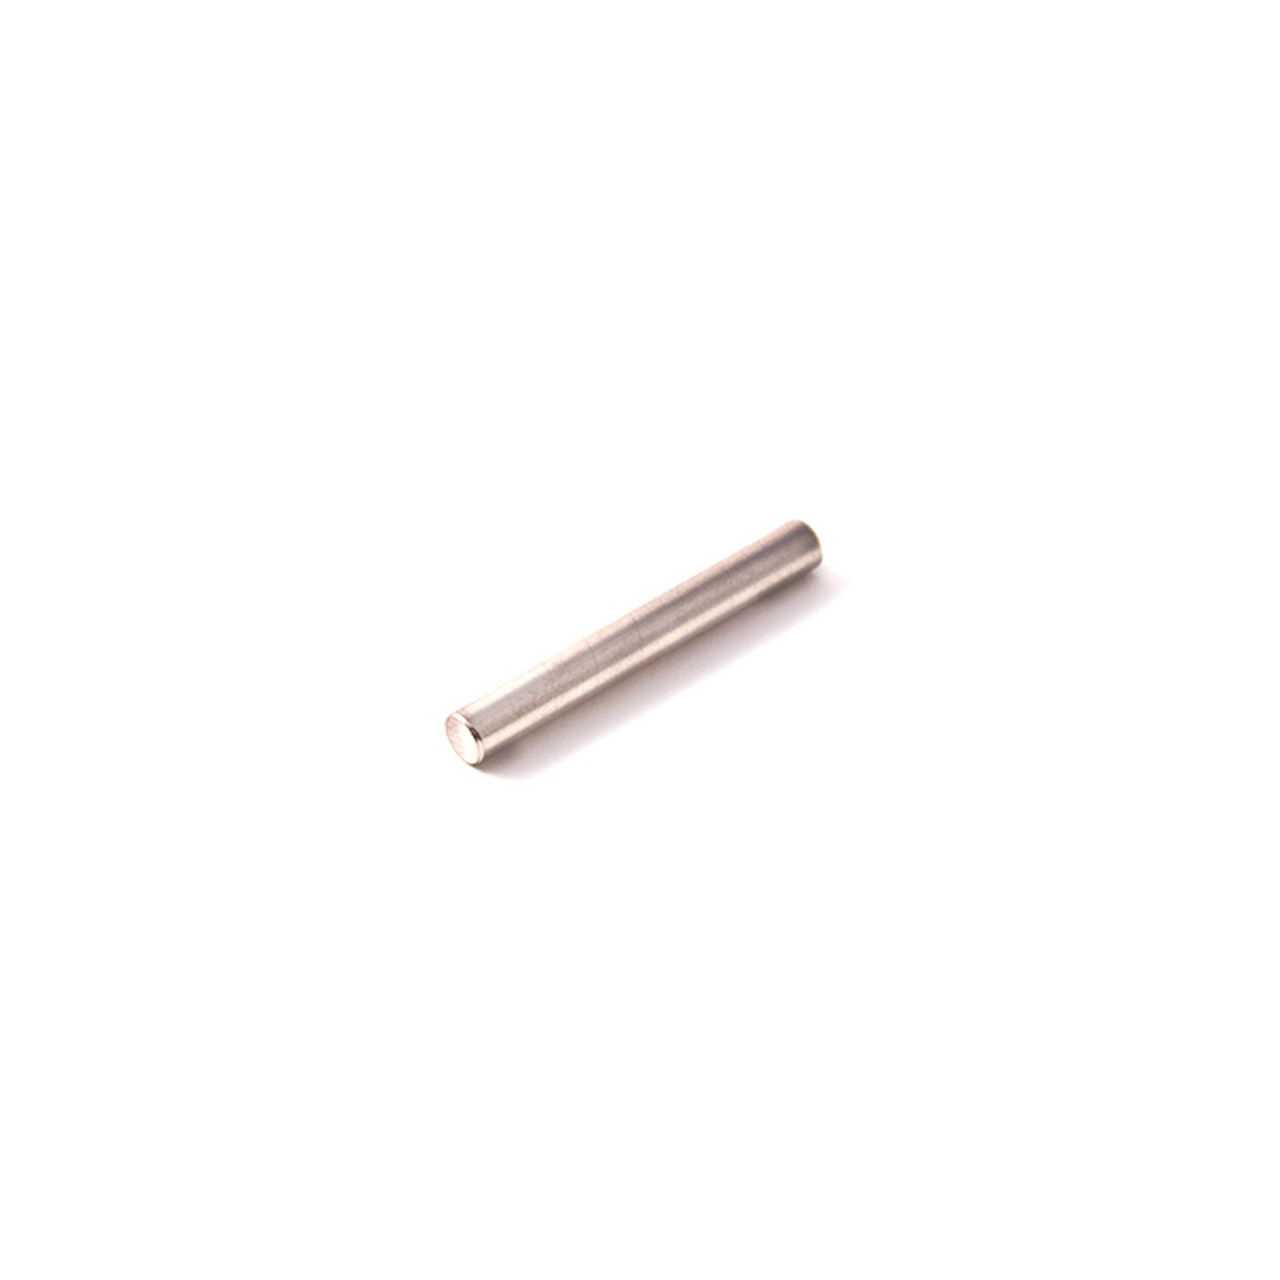 Stainless Steel Pins - Spring Dowel Pins Manufacturer from Vasai Virar